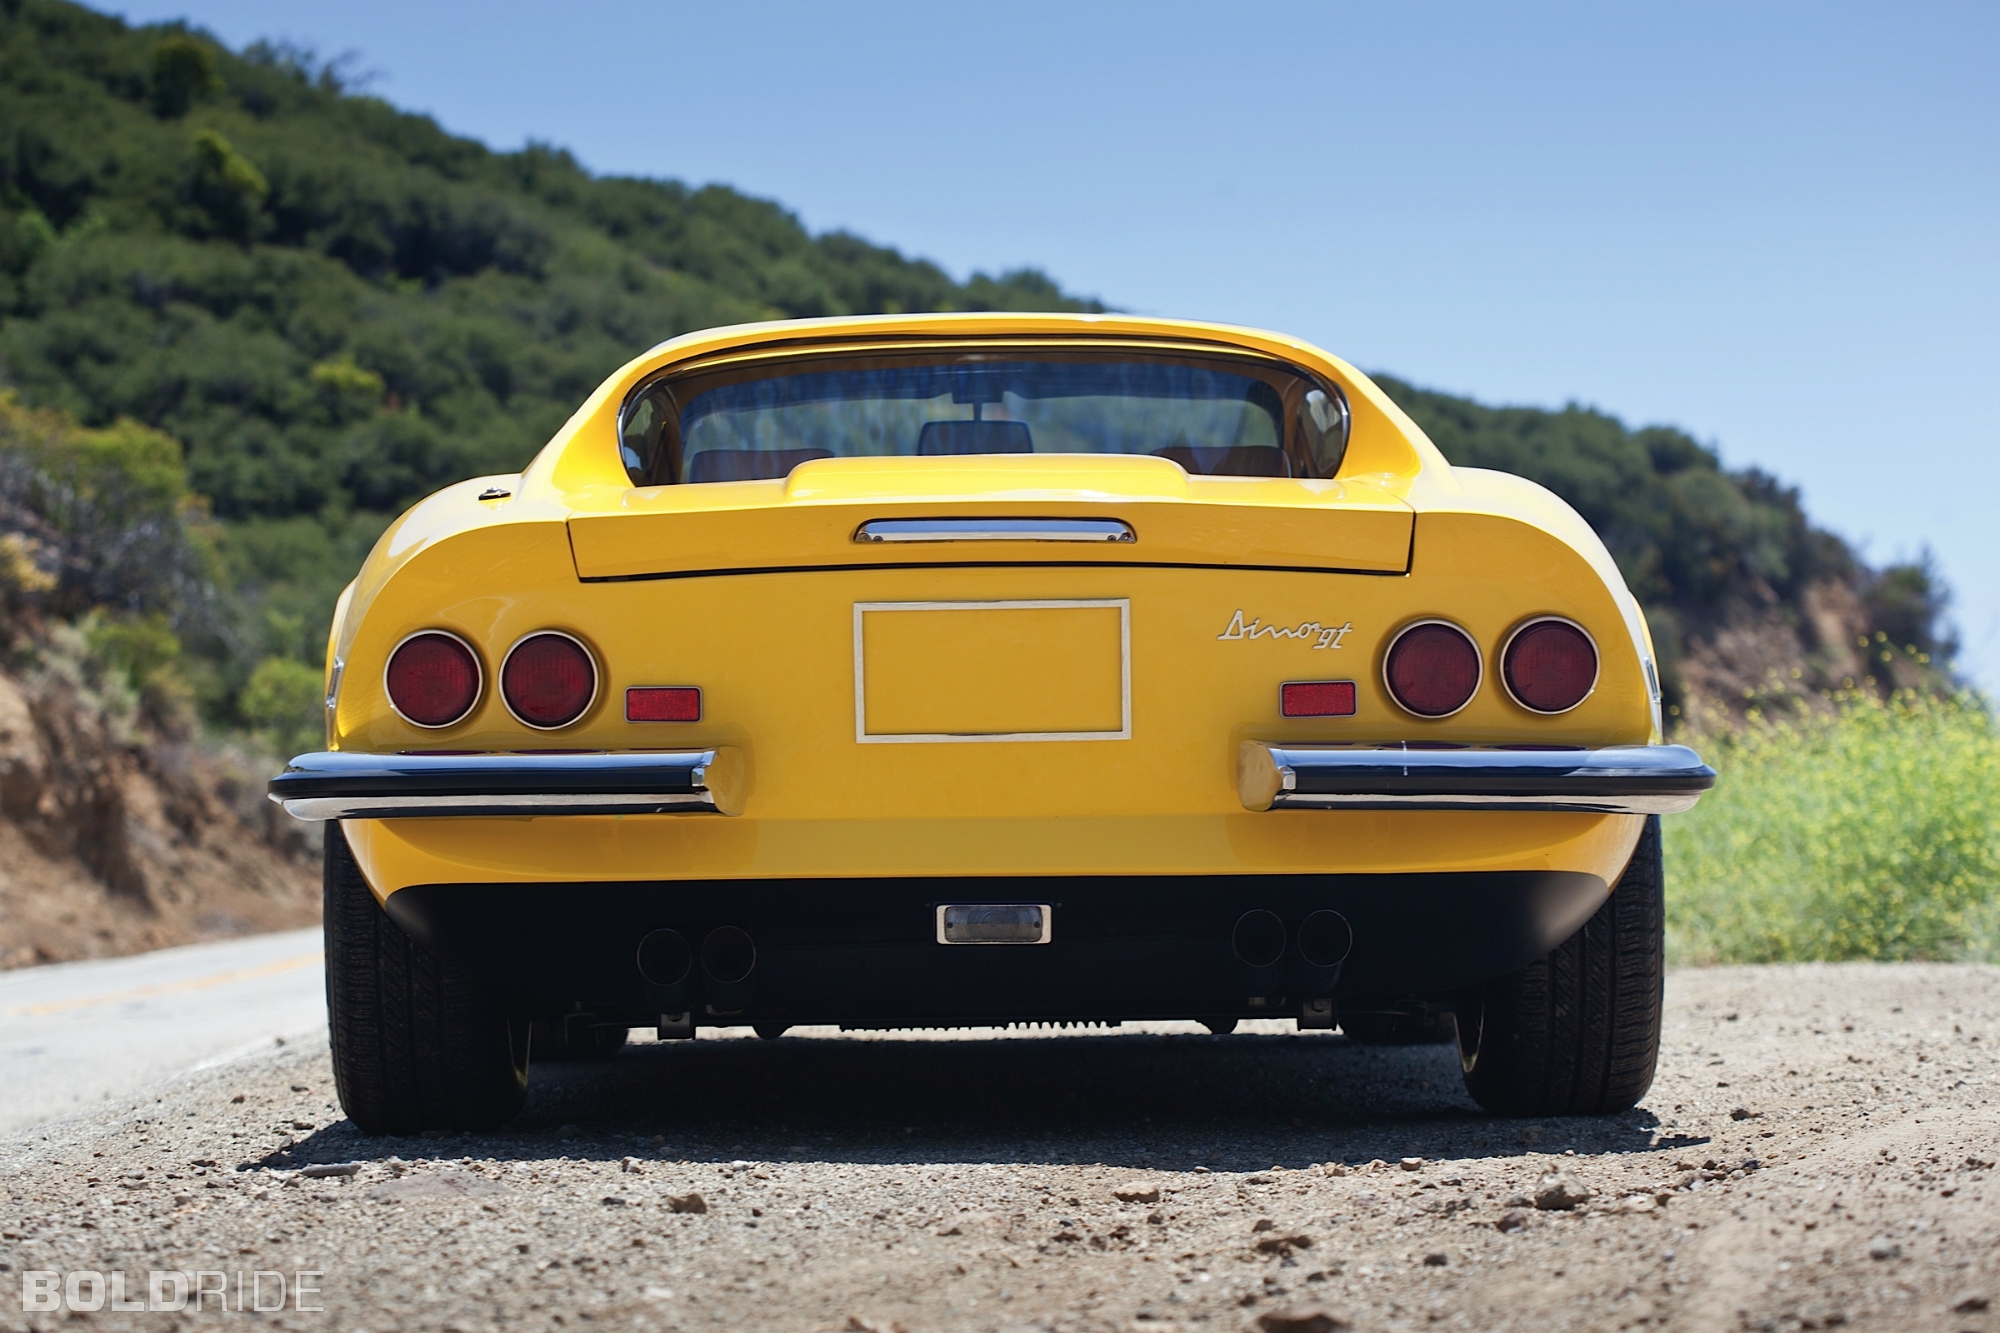 1974 Ferrari Dino 246 GTS Boldride.com - Pictures, Wallpapers